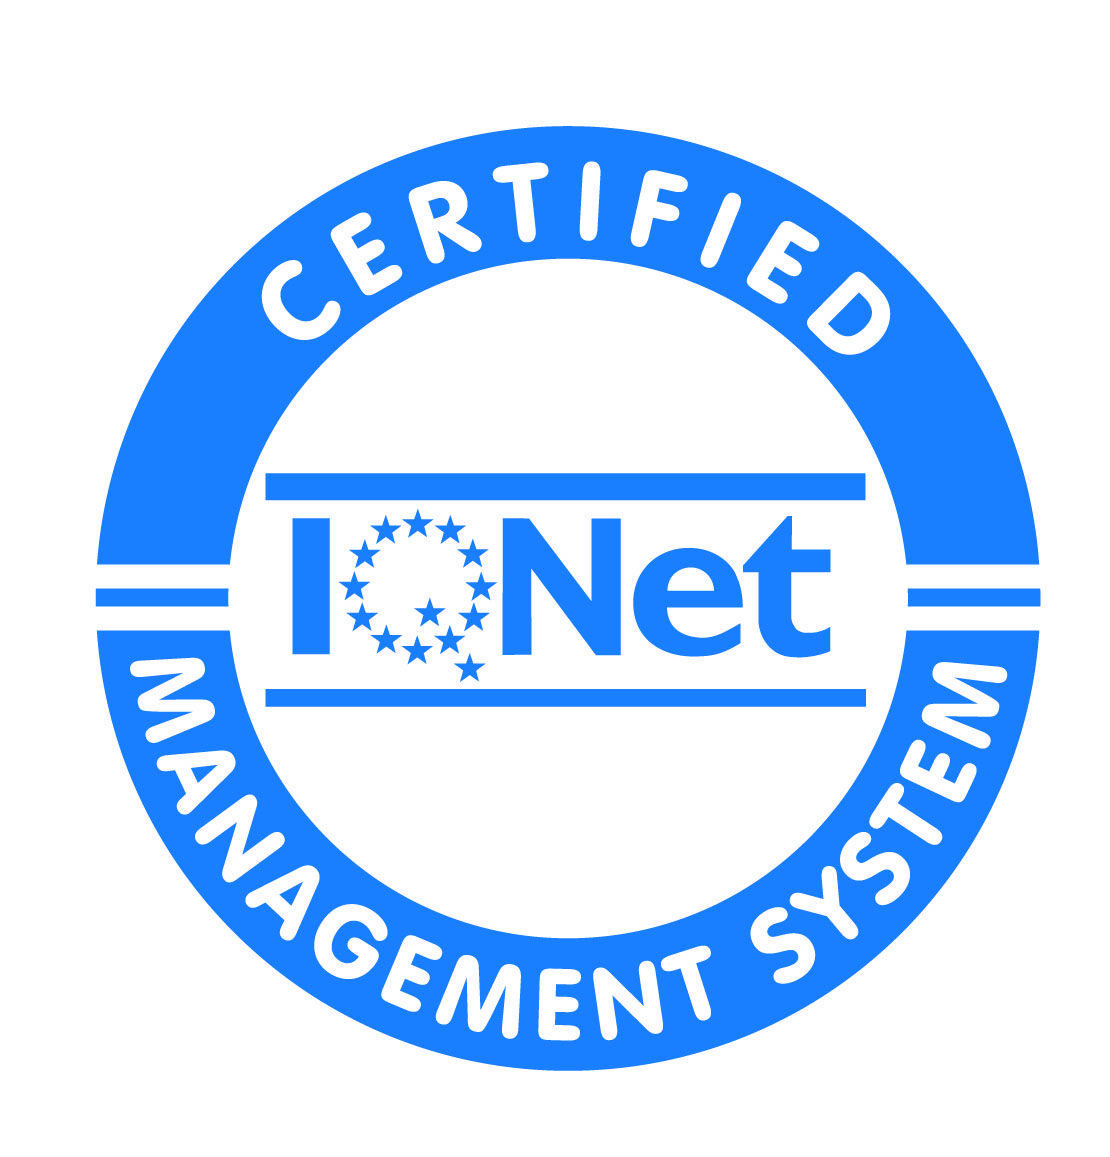 Certification Logo - Certification logo/symbols